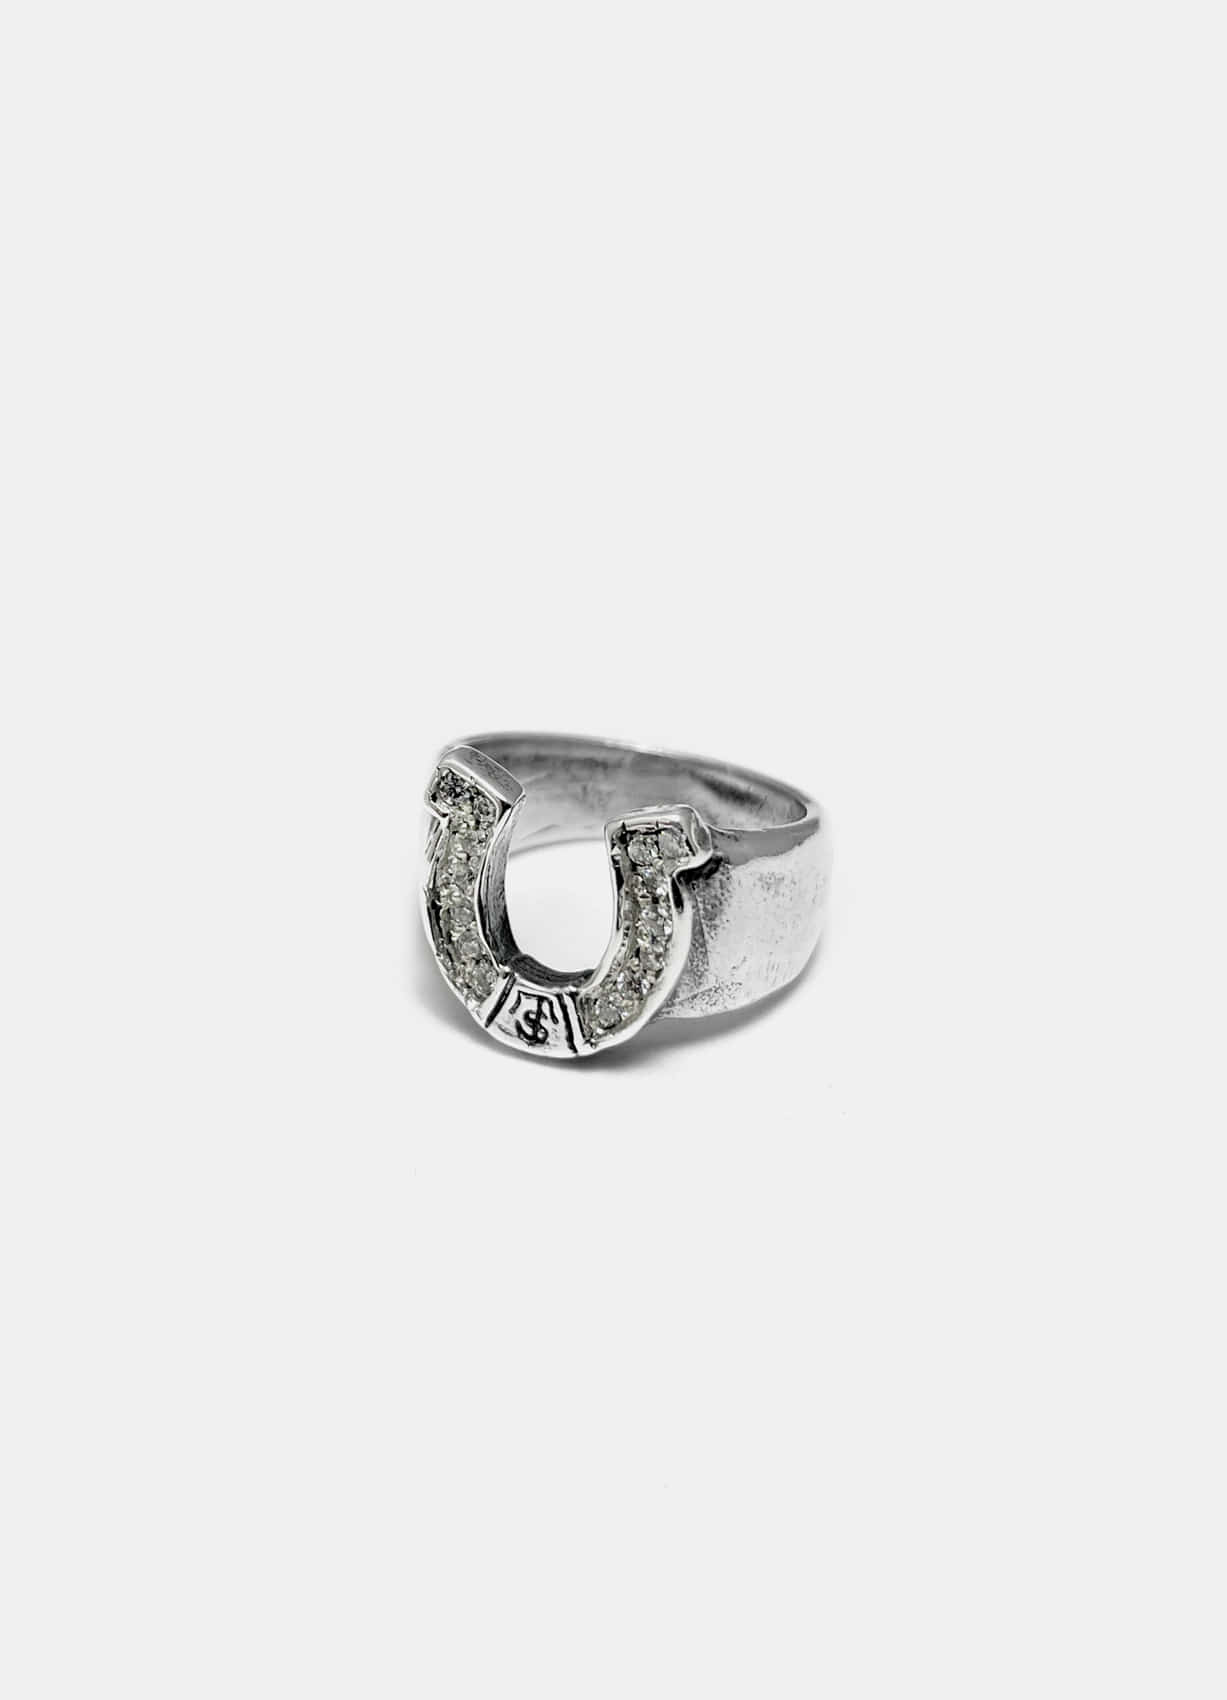 Horse shoe Silver Ring Cubic Zirconia Custom